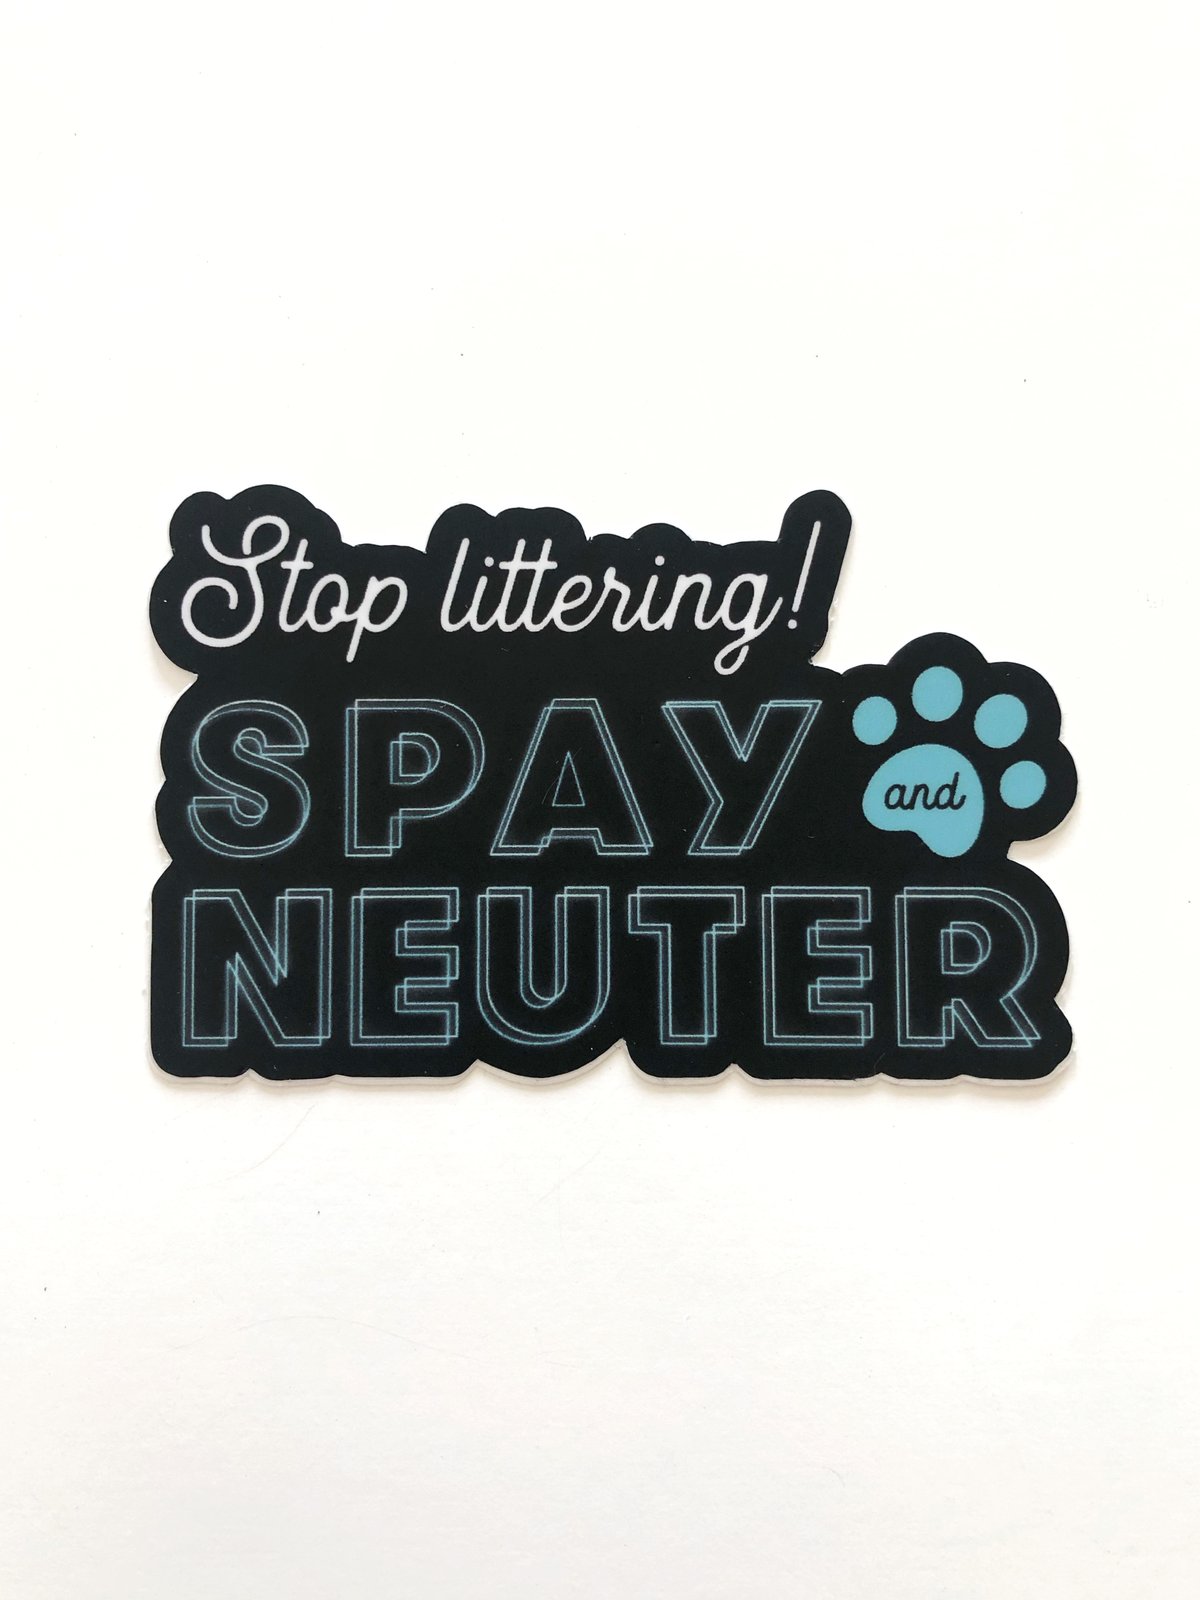 Image of "Stop Littering - Spay & Neuter" Sticker